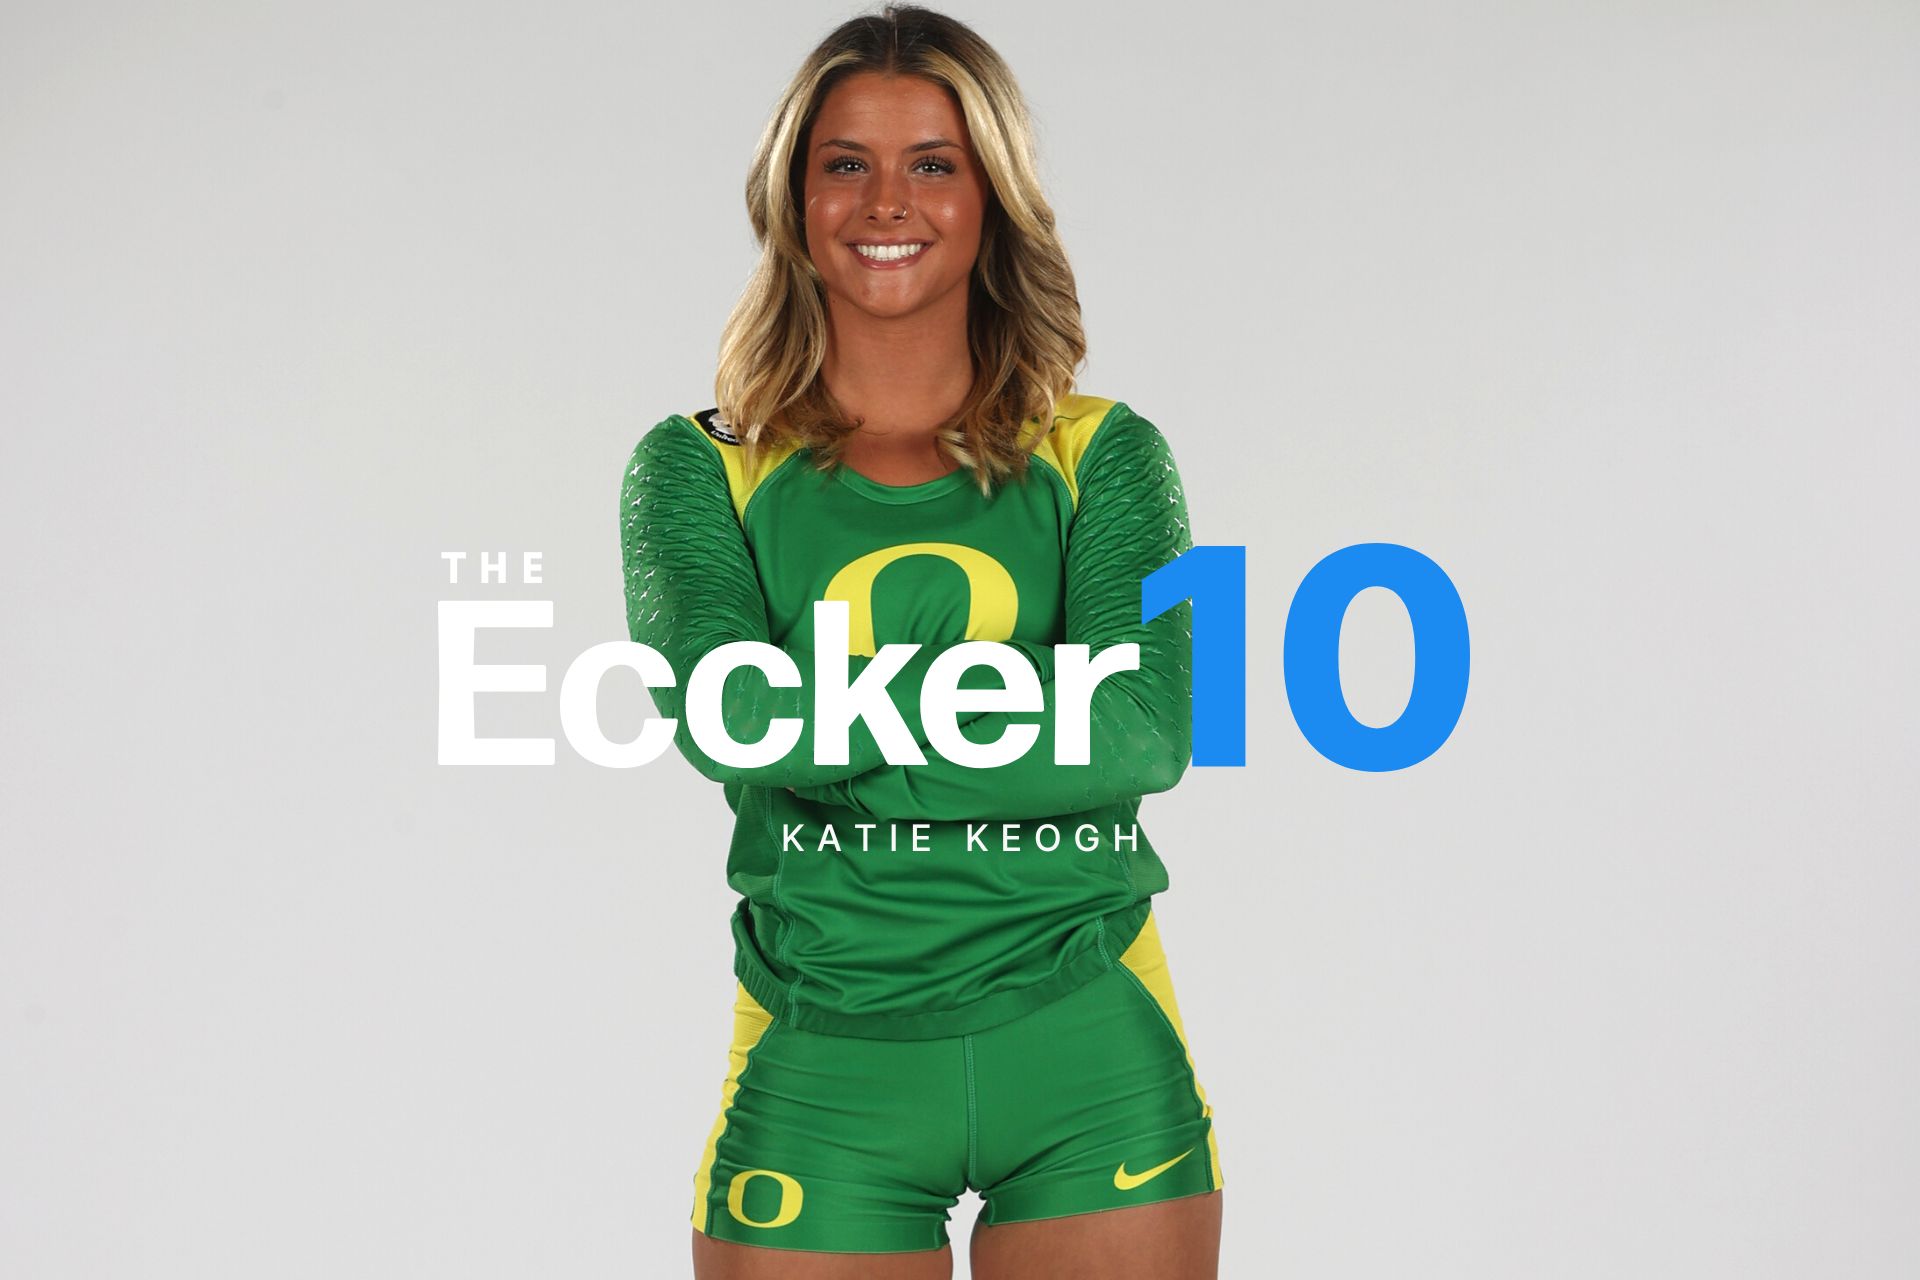 The Eccker 10 - Katie Keogh